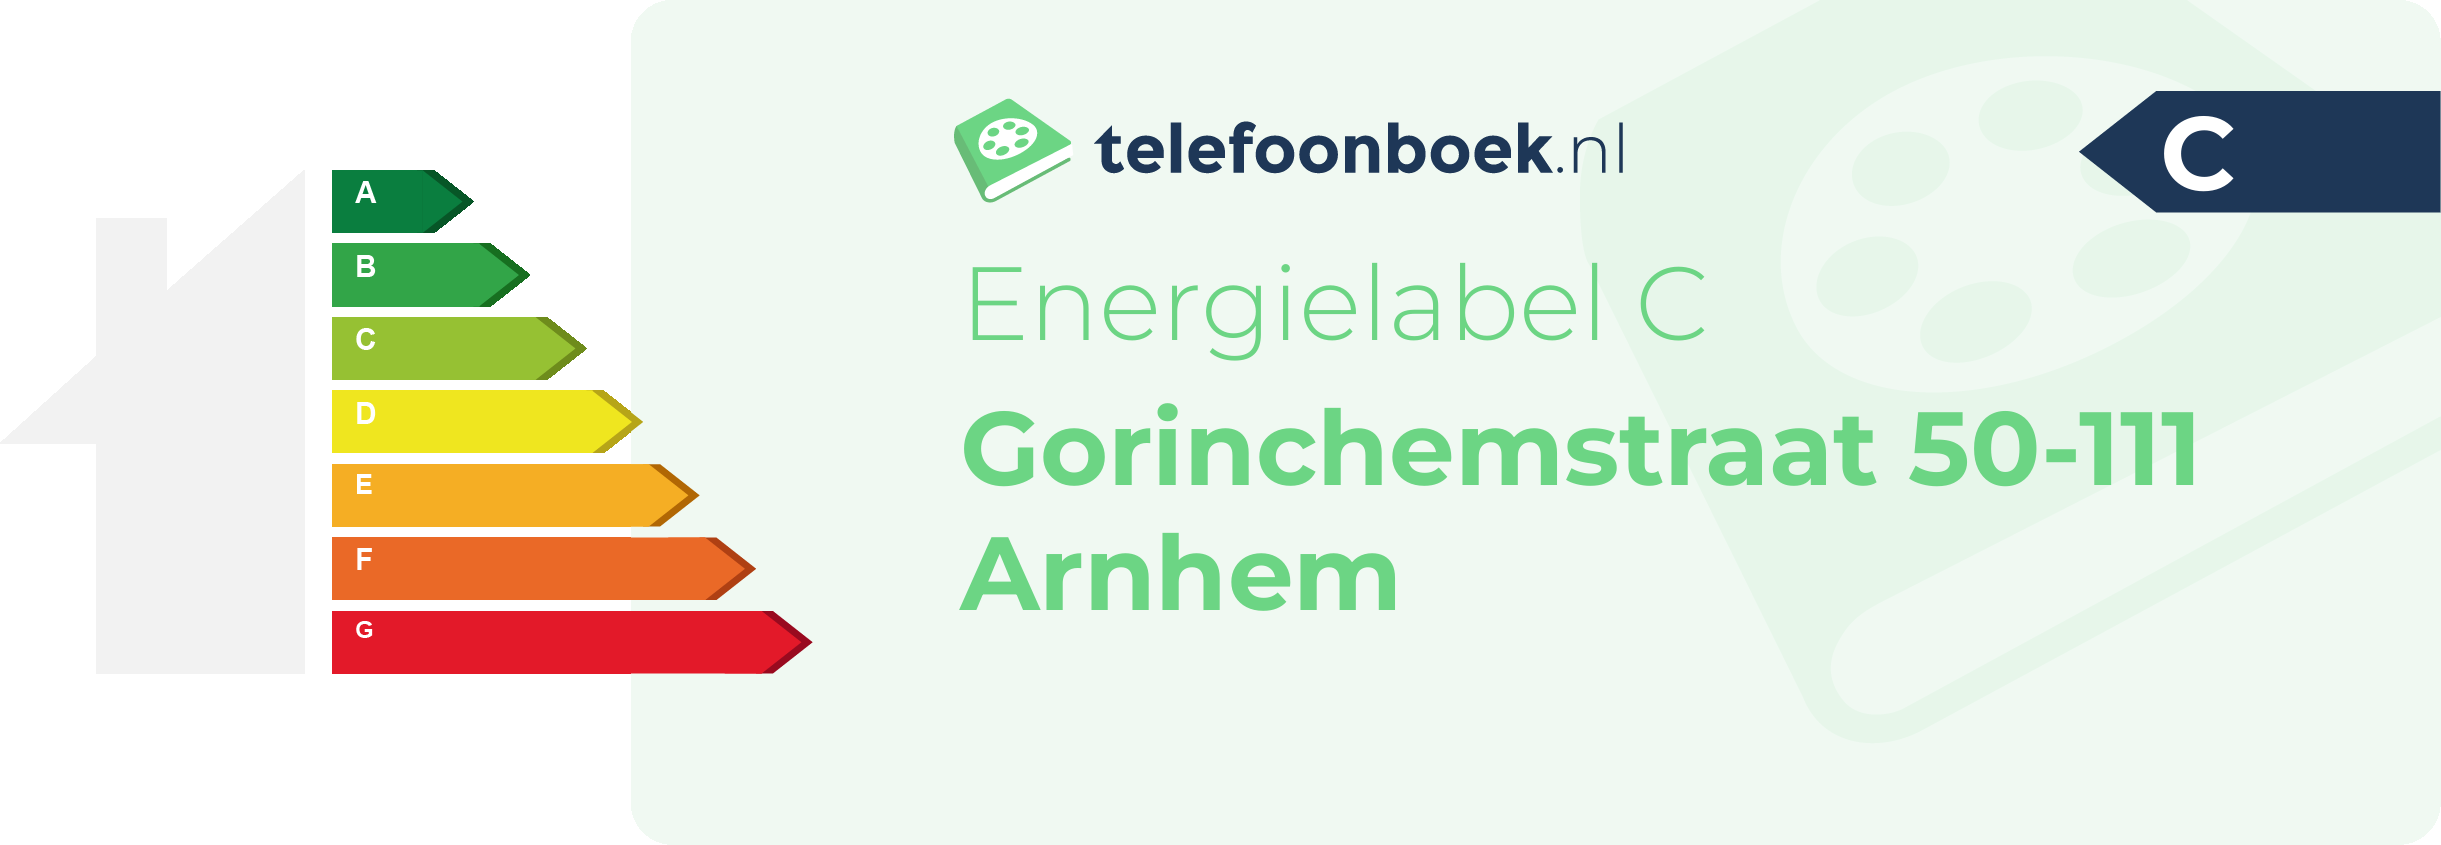 Energielabel Gorinchemstraat 50-111 Arnhem